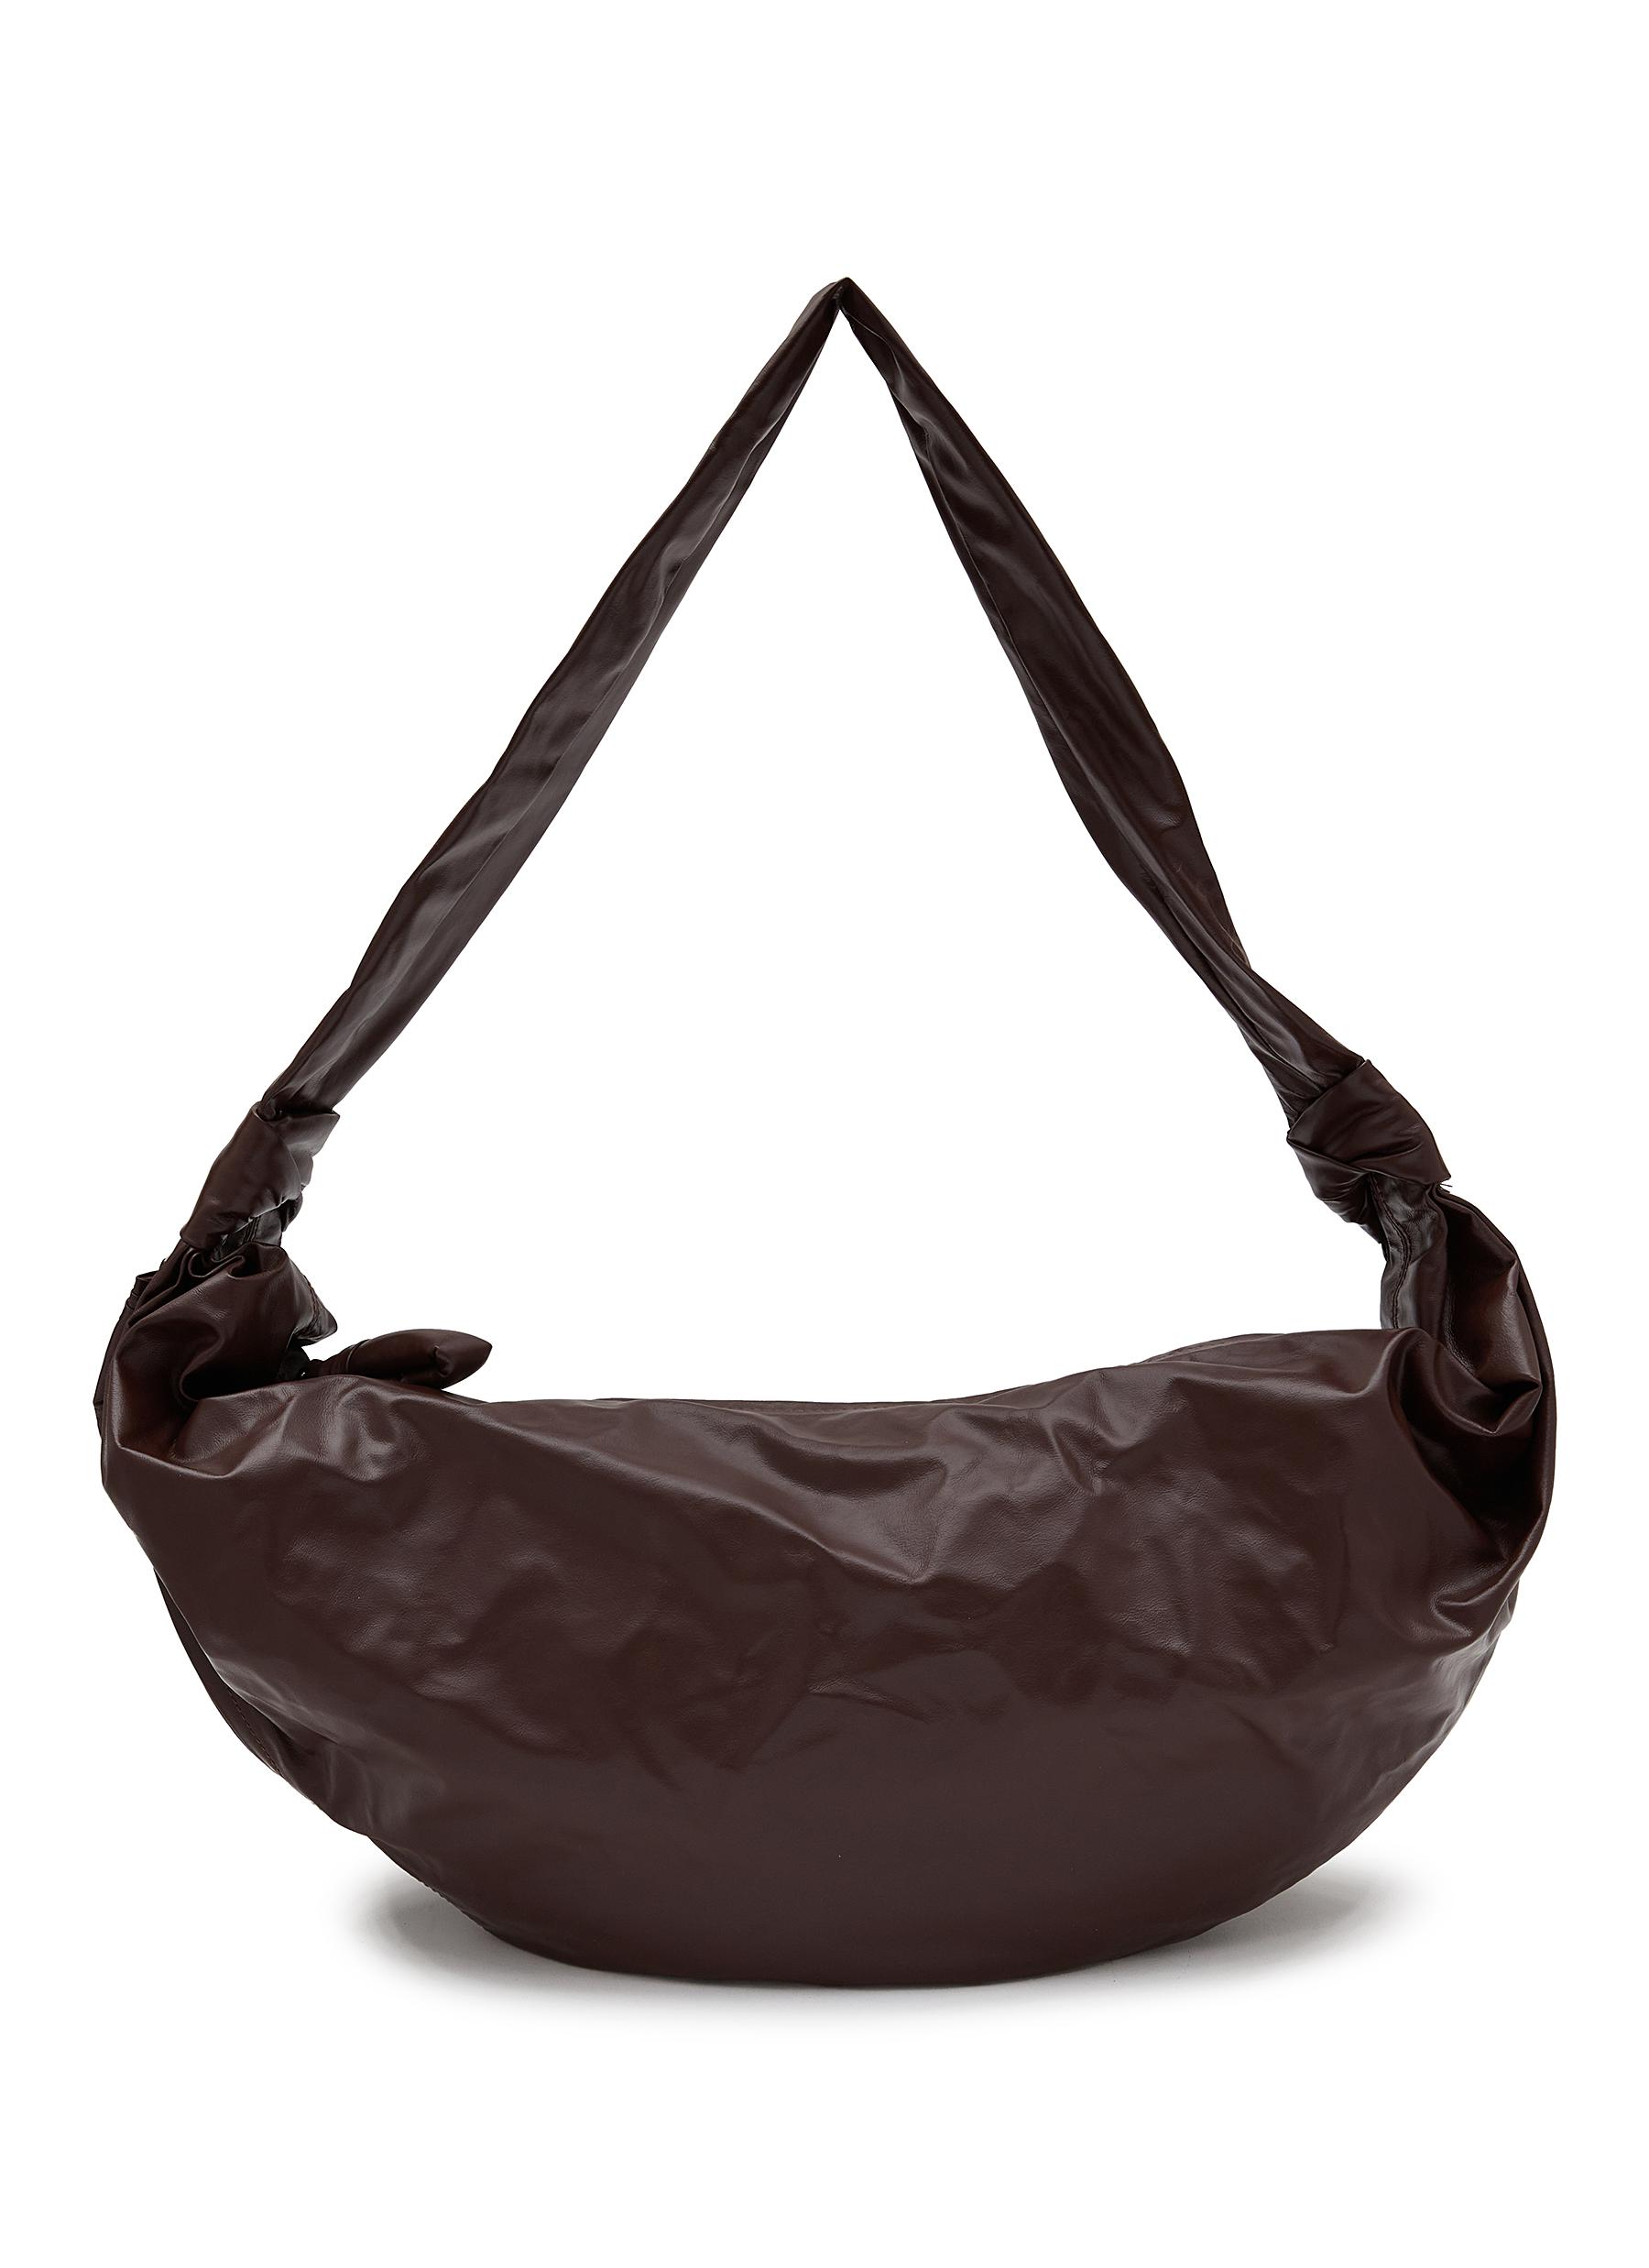 Lemaire Leather Croissant Shoulder Bag